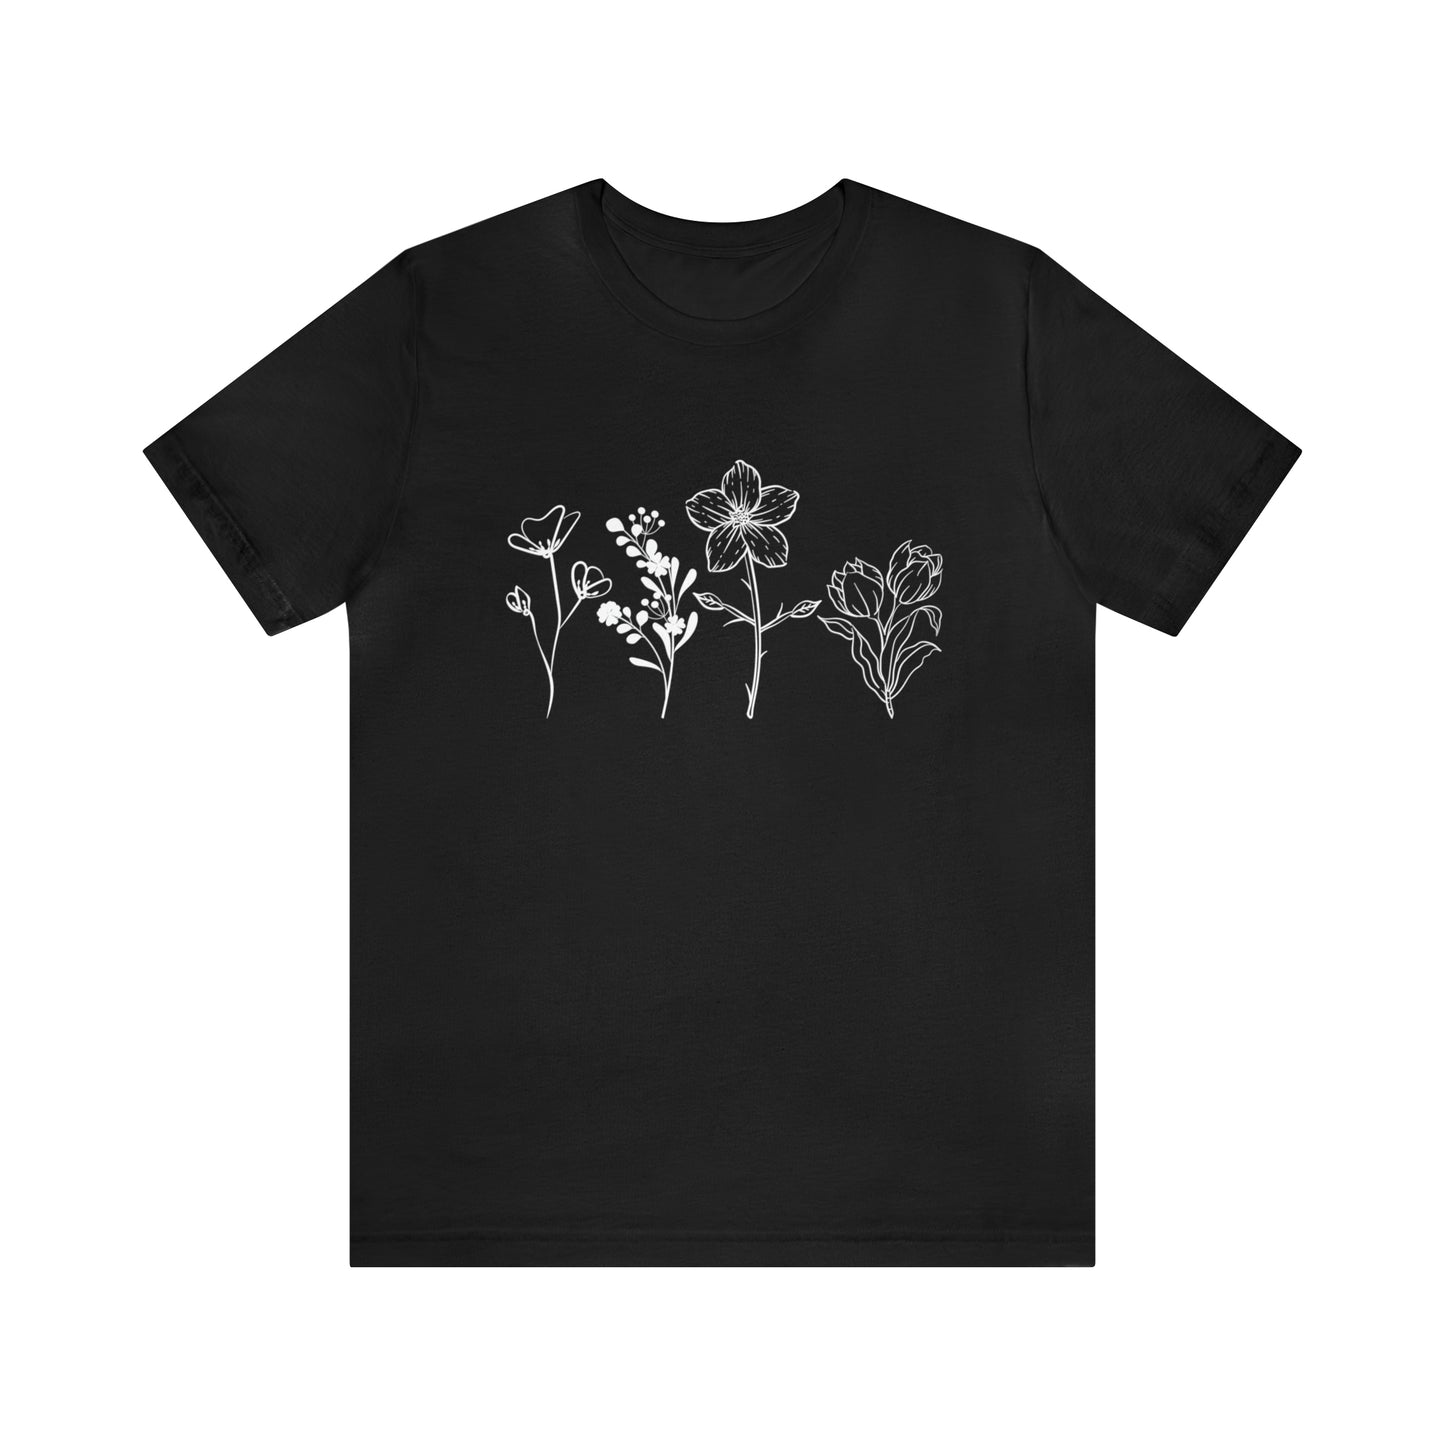 Wildflower Tshirt, Wild Flowers Shirt, Floral Tshirt, Flower Shirt, Gift for Women, Ladies Shirts, Best Friend Gift, Plant Mom shirt Garden